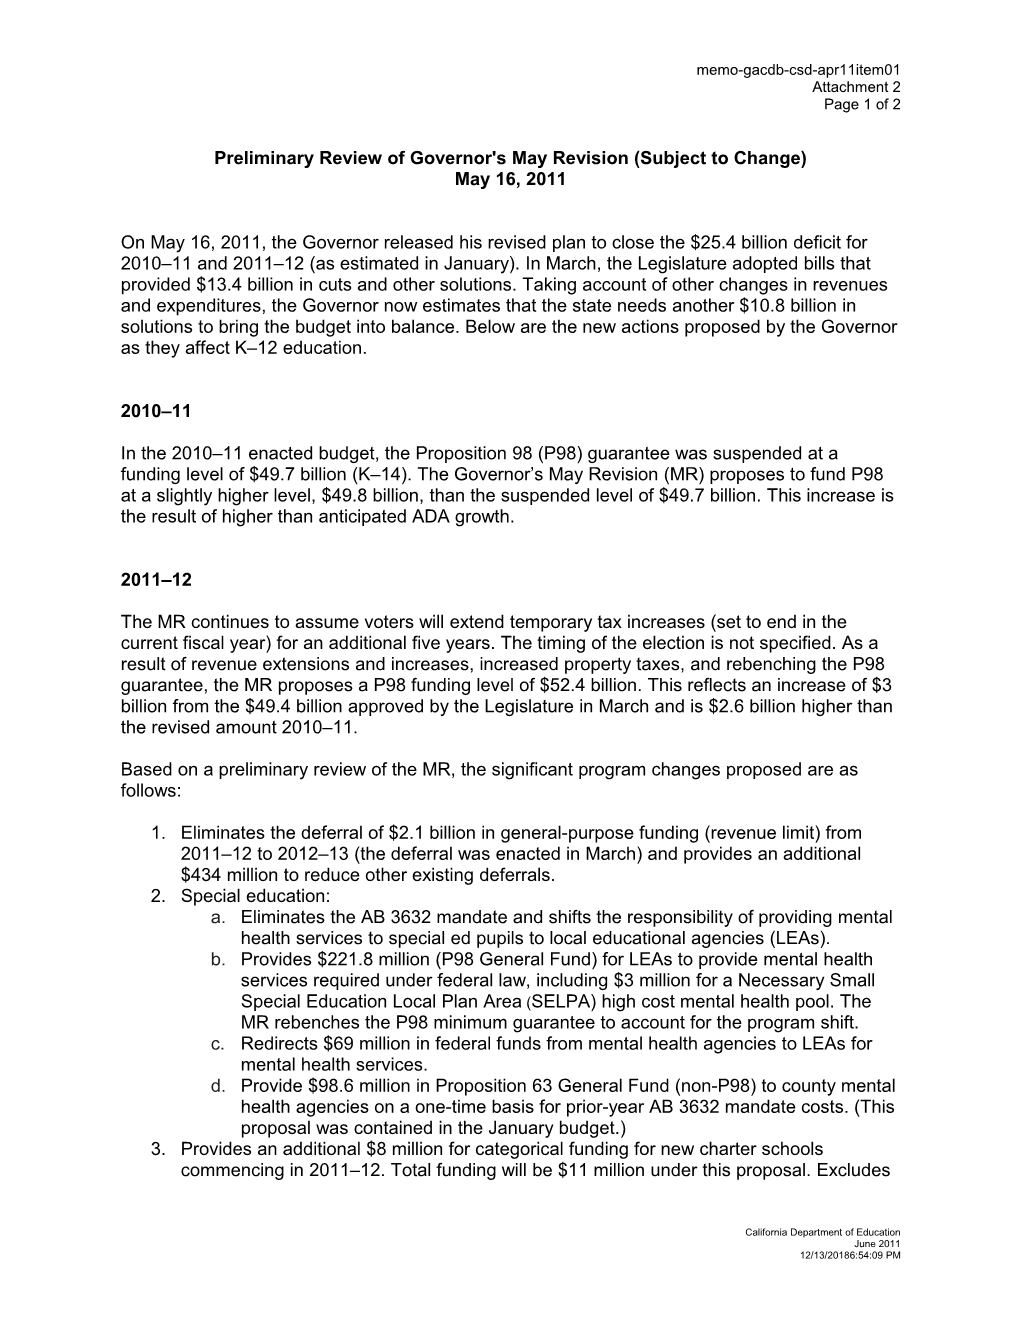 June 2011 Memorandum CSD Item 1 Attachment 2 - Information Memorandum (CA State Board Of